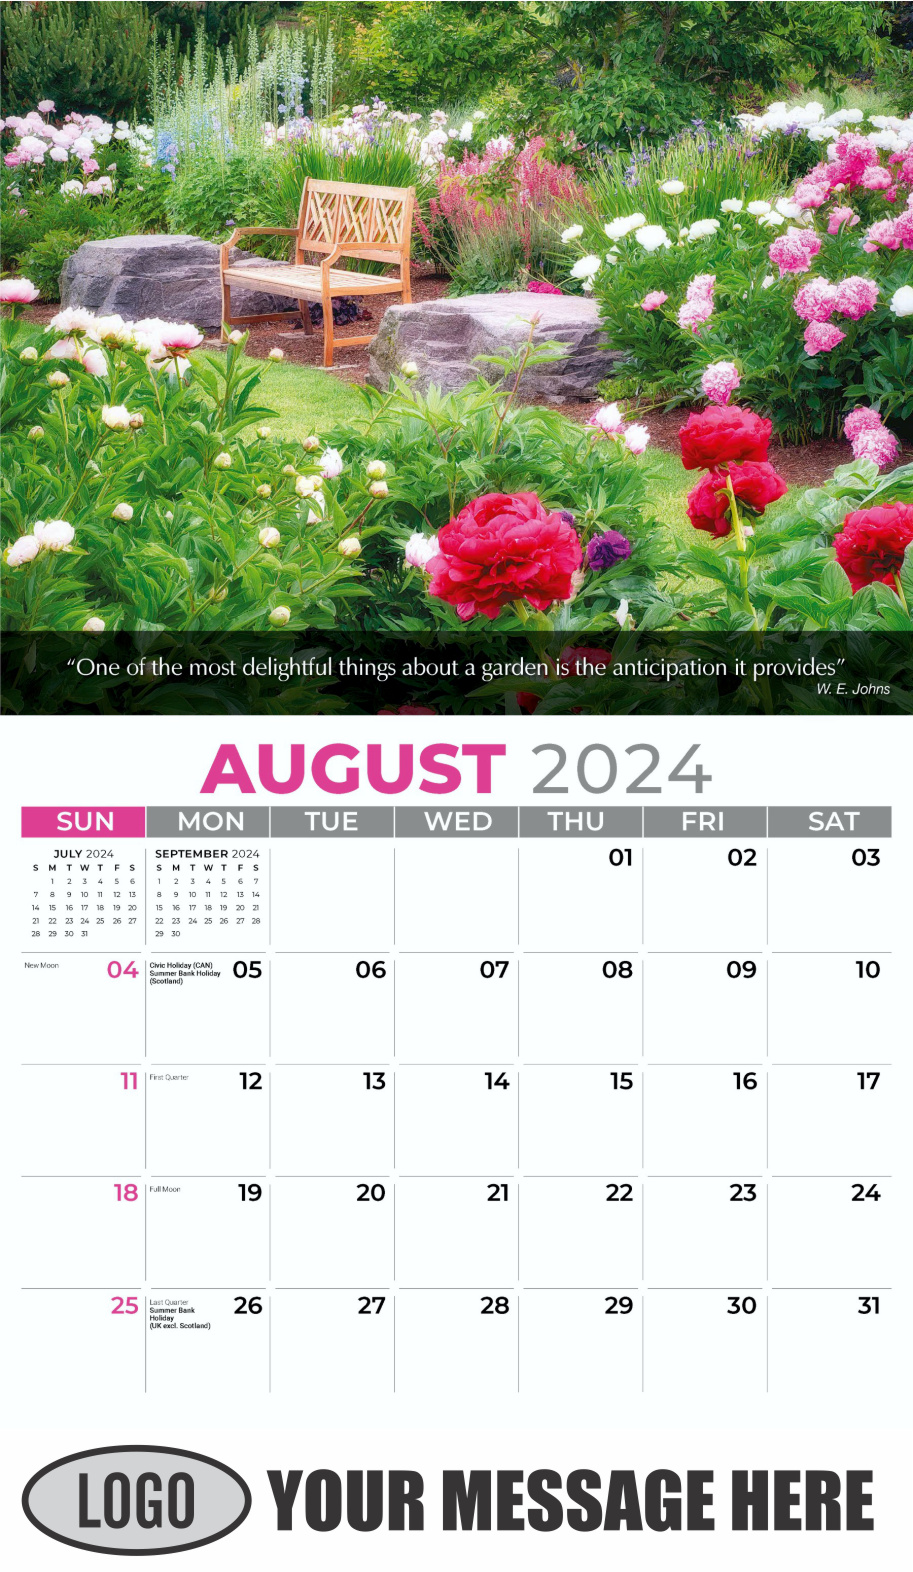 Flowers and Gardens 2024 Business Advertising Calendar - August